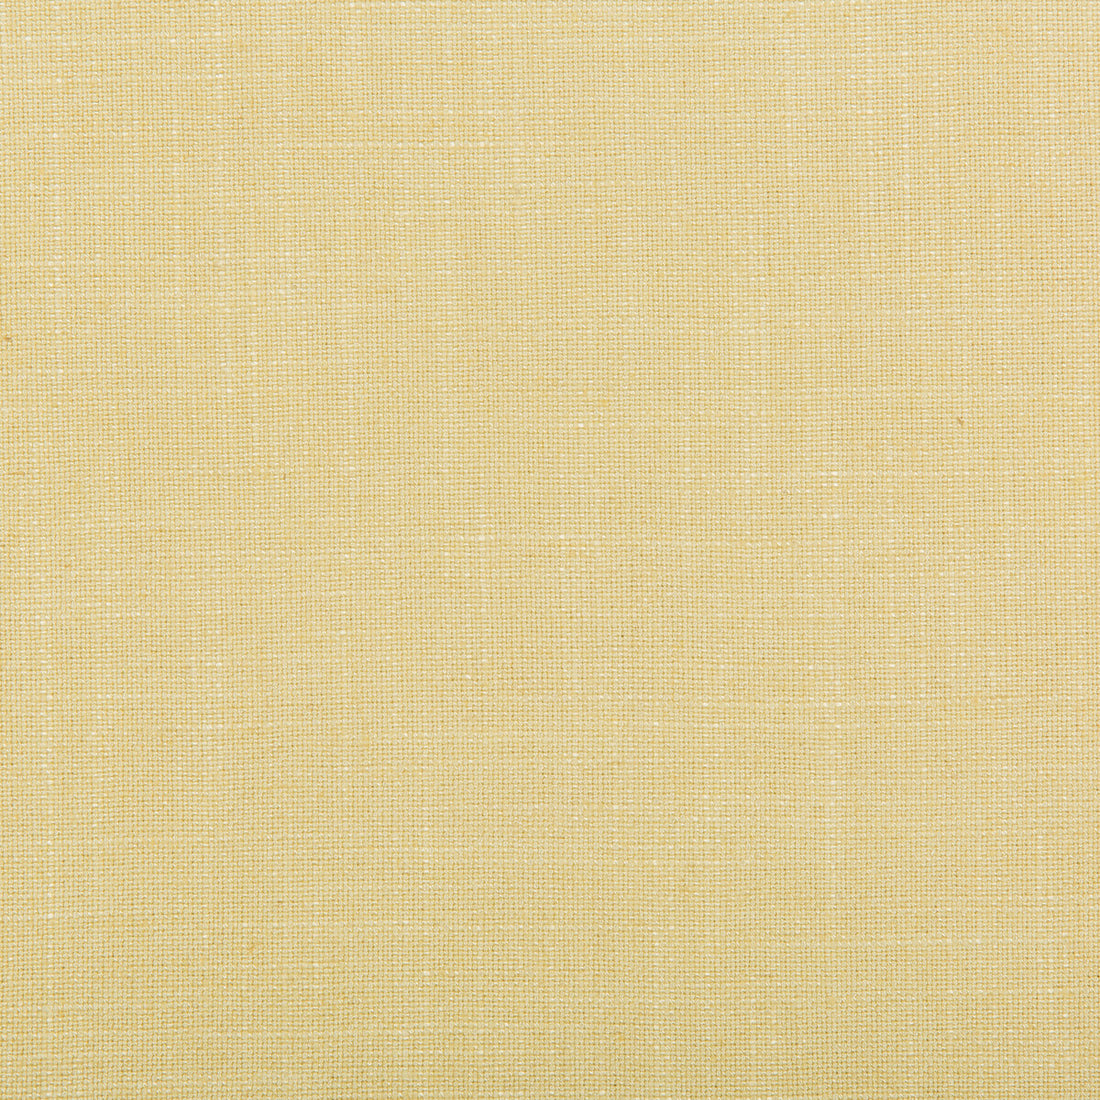 Aura fabric in butter color - pattern 35520.14.0 - by Kravet Design